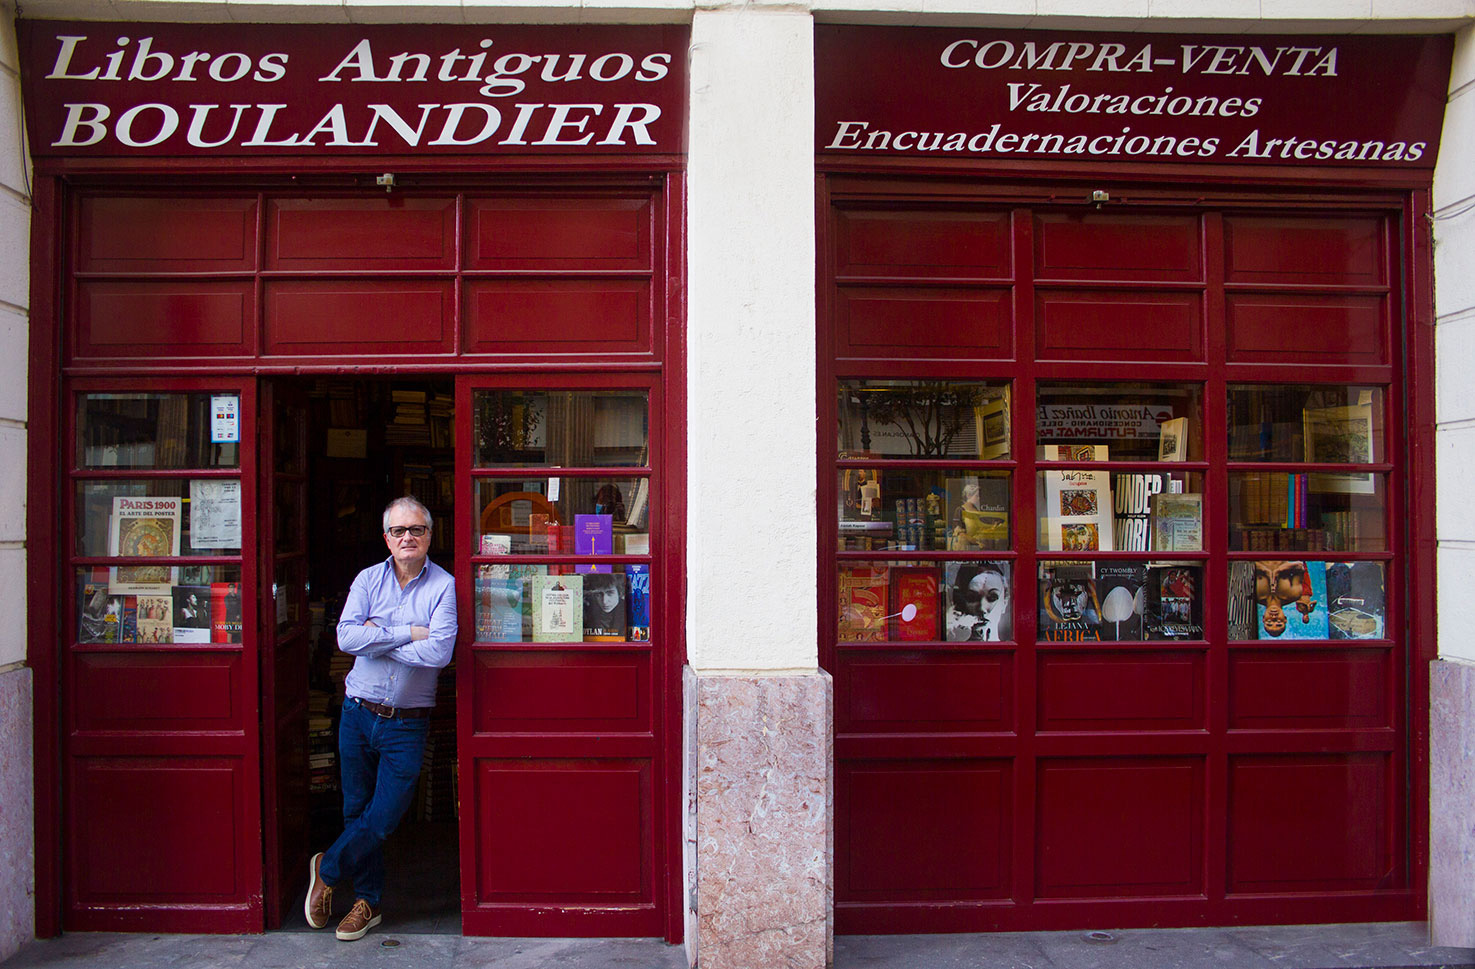 Repegar Contratación Santo Compra-venta de libros antiguos en Bilbao - Librería Boulandier